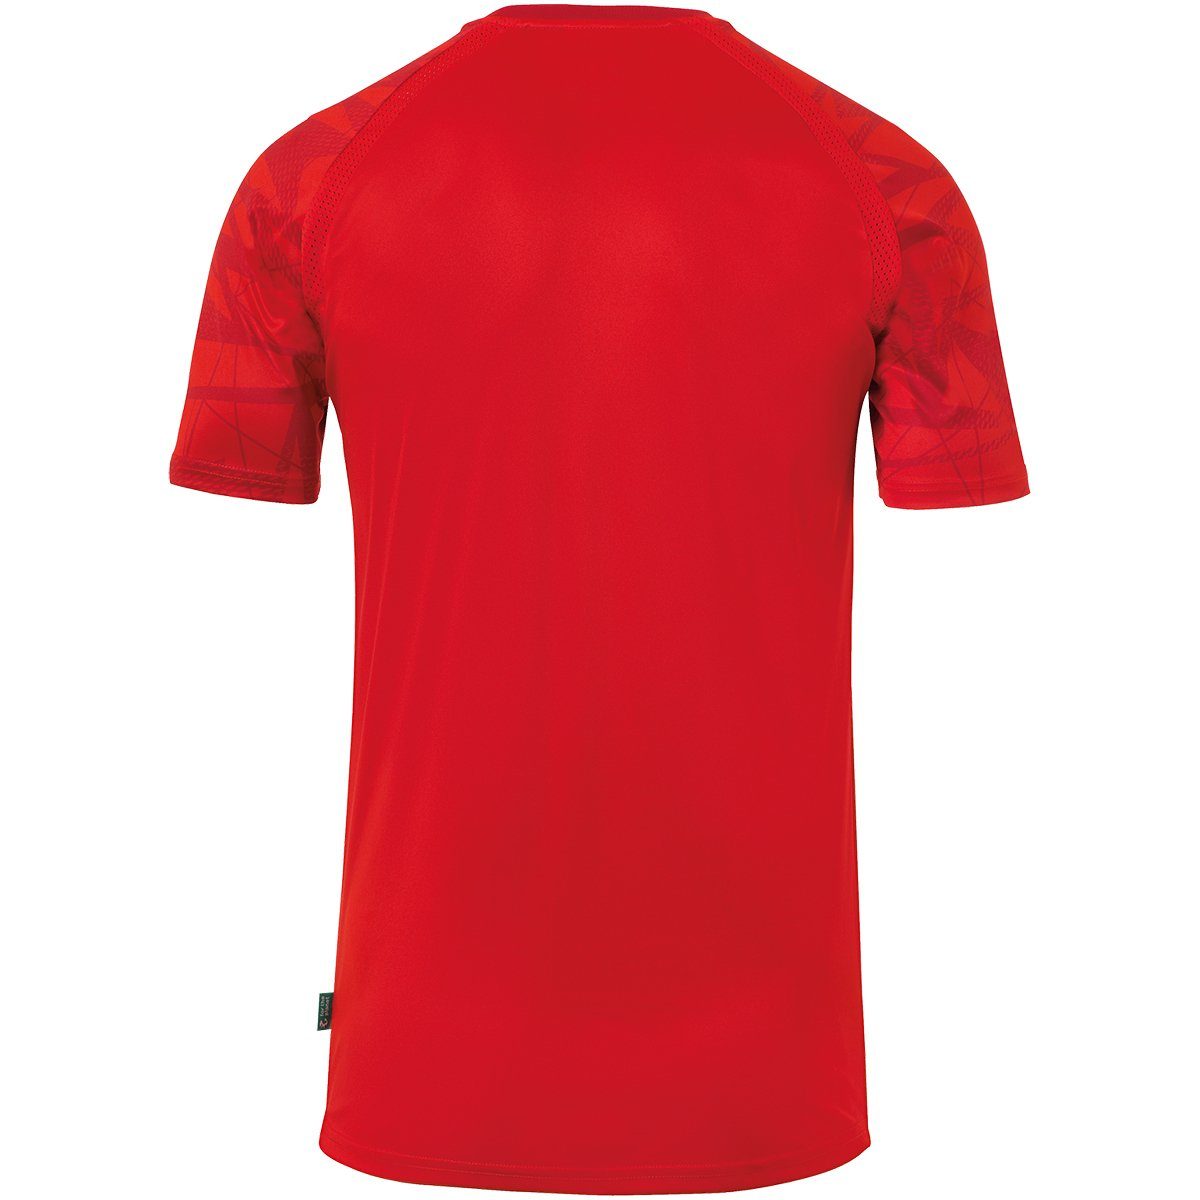 KURZARM rot/weiß Trainings-T-Shirt TRIKOT Trainingsshirt uhlsport GOAL 25 uhlsport atmungsaktiv